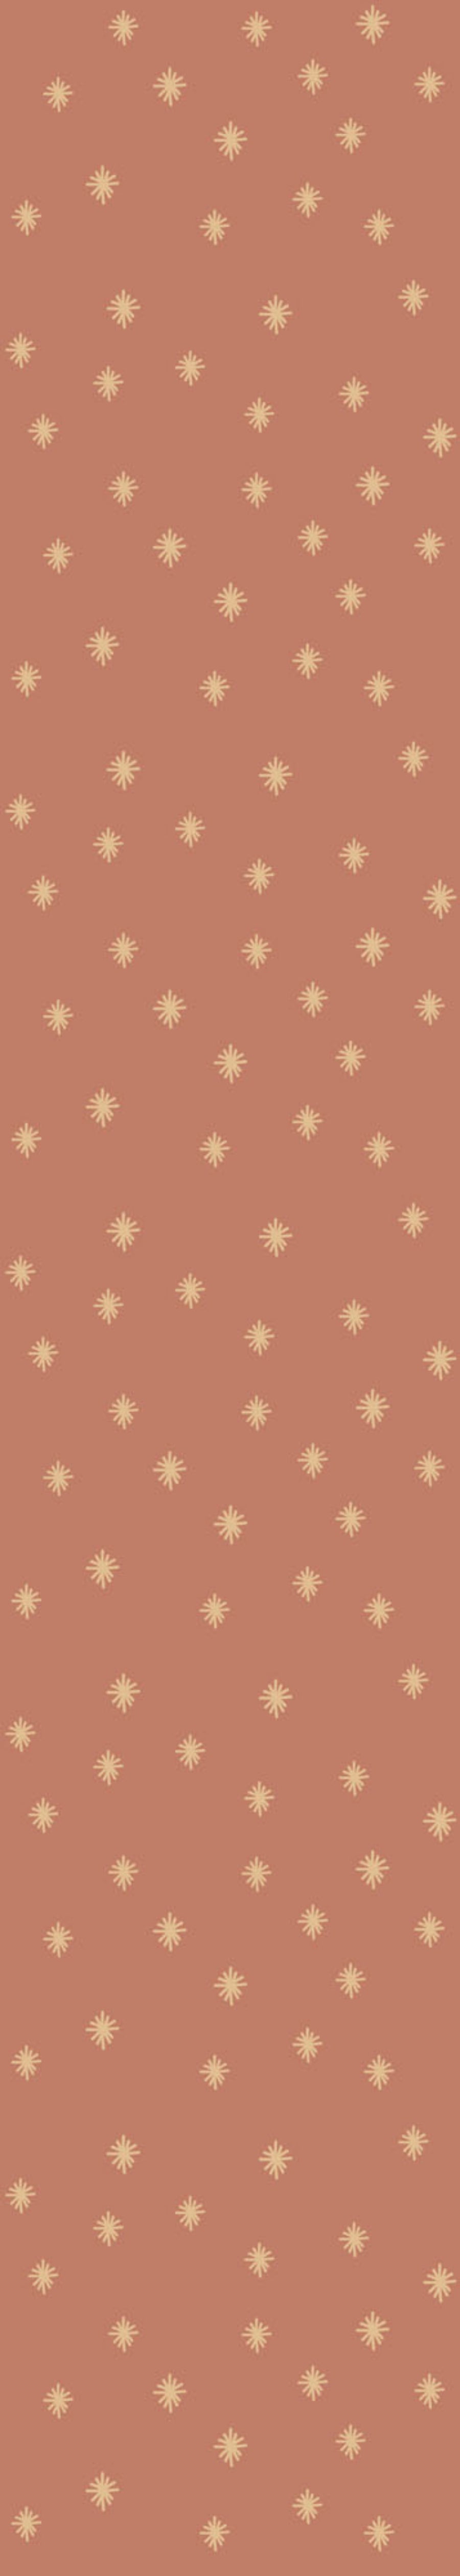 Irregulars Stars On Brick Background Wallpaper 50x280CM